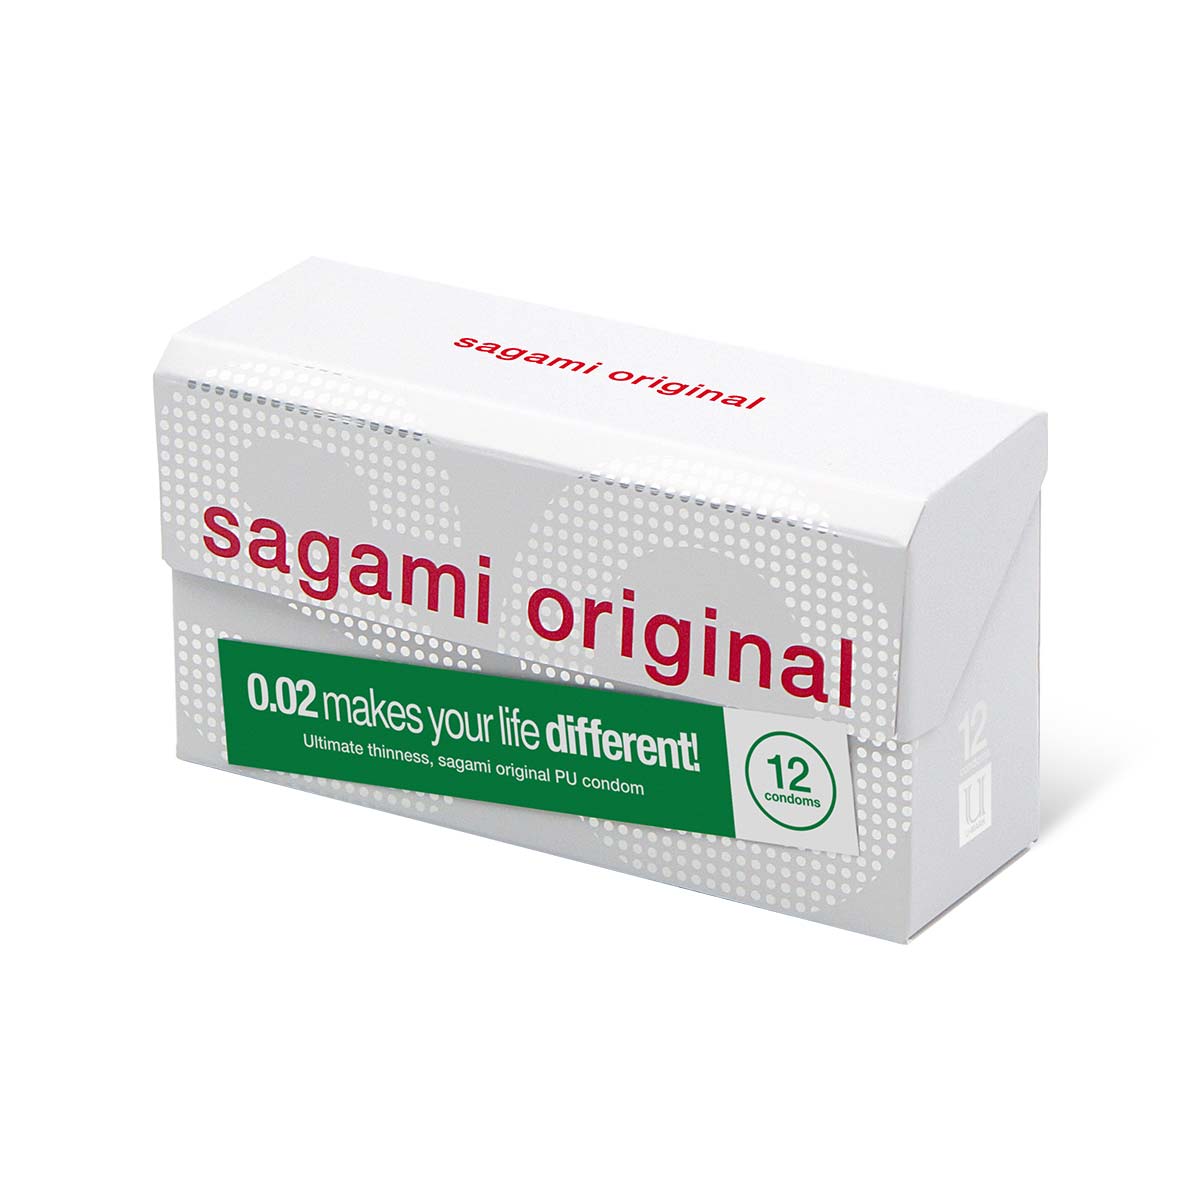 Sagami Original 0.02 (2nd generation) 12's Pack PU Condom-p_1